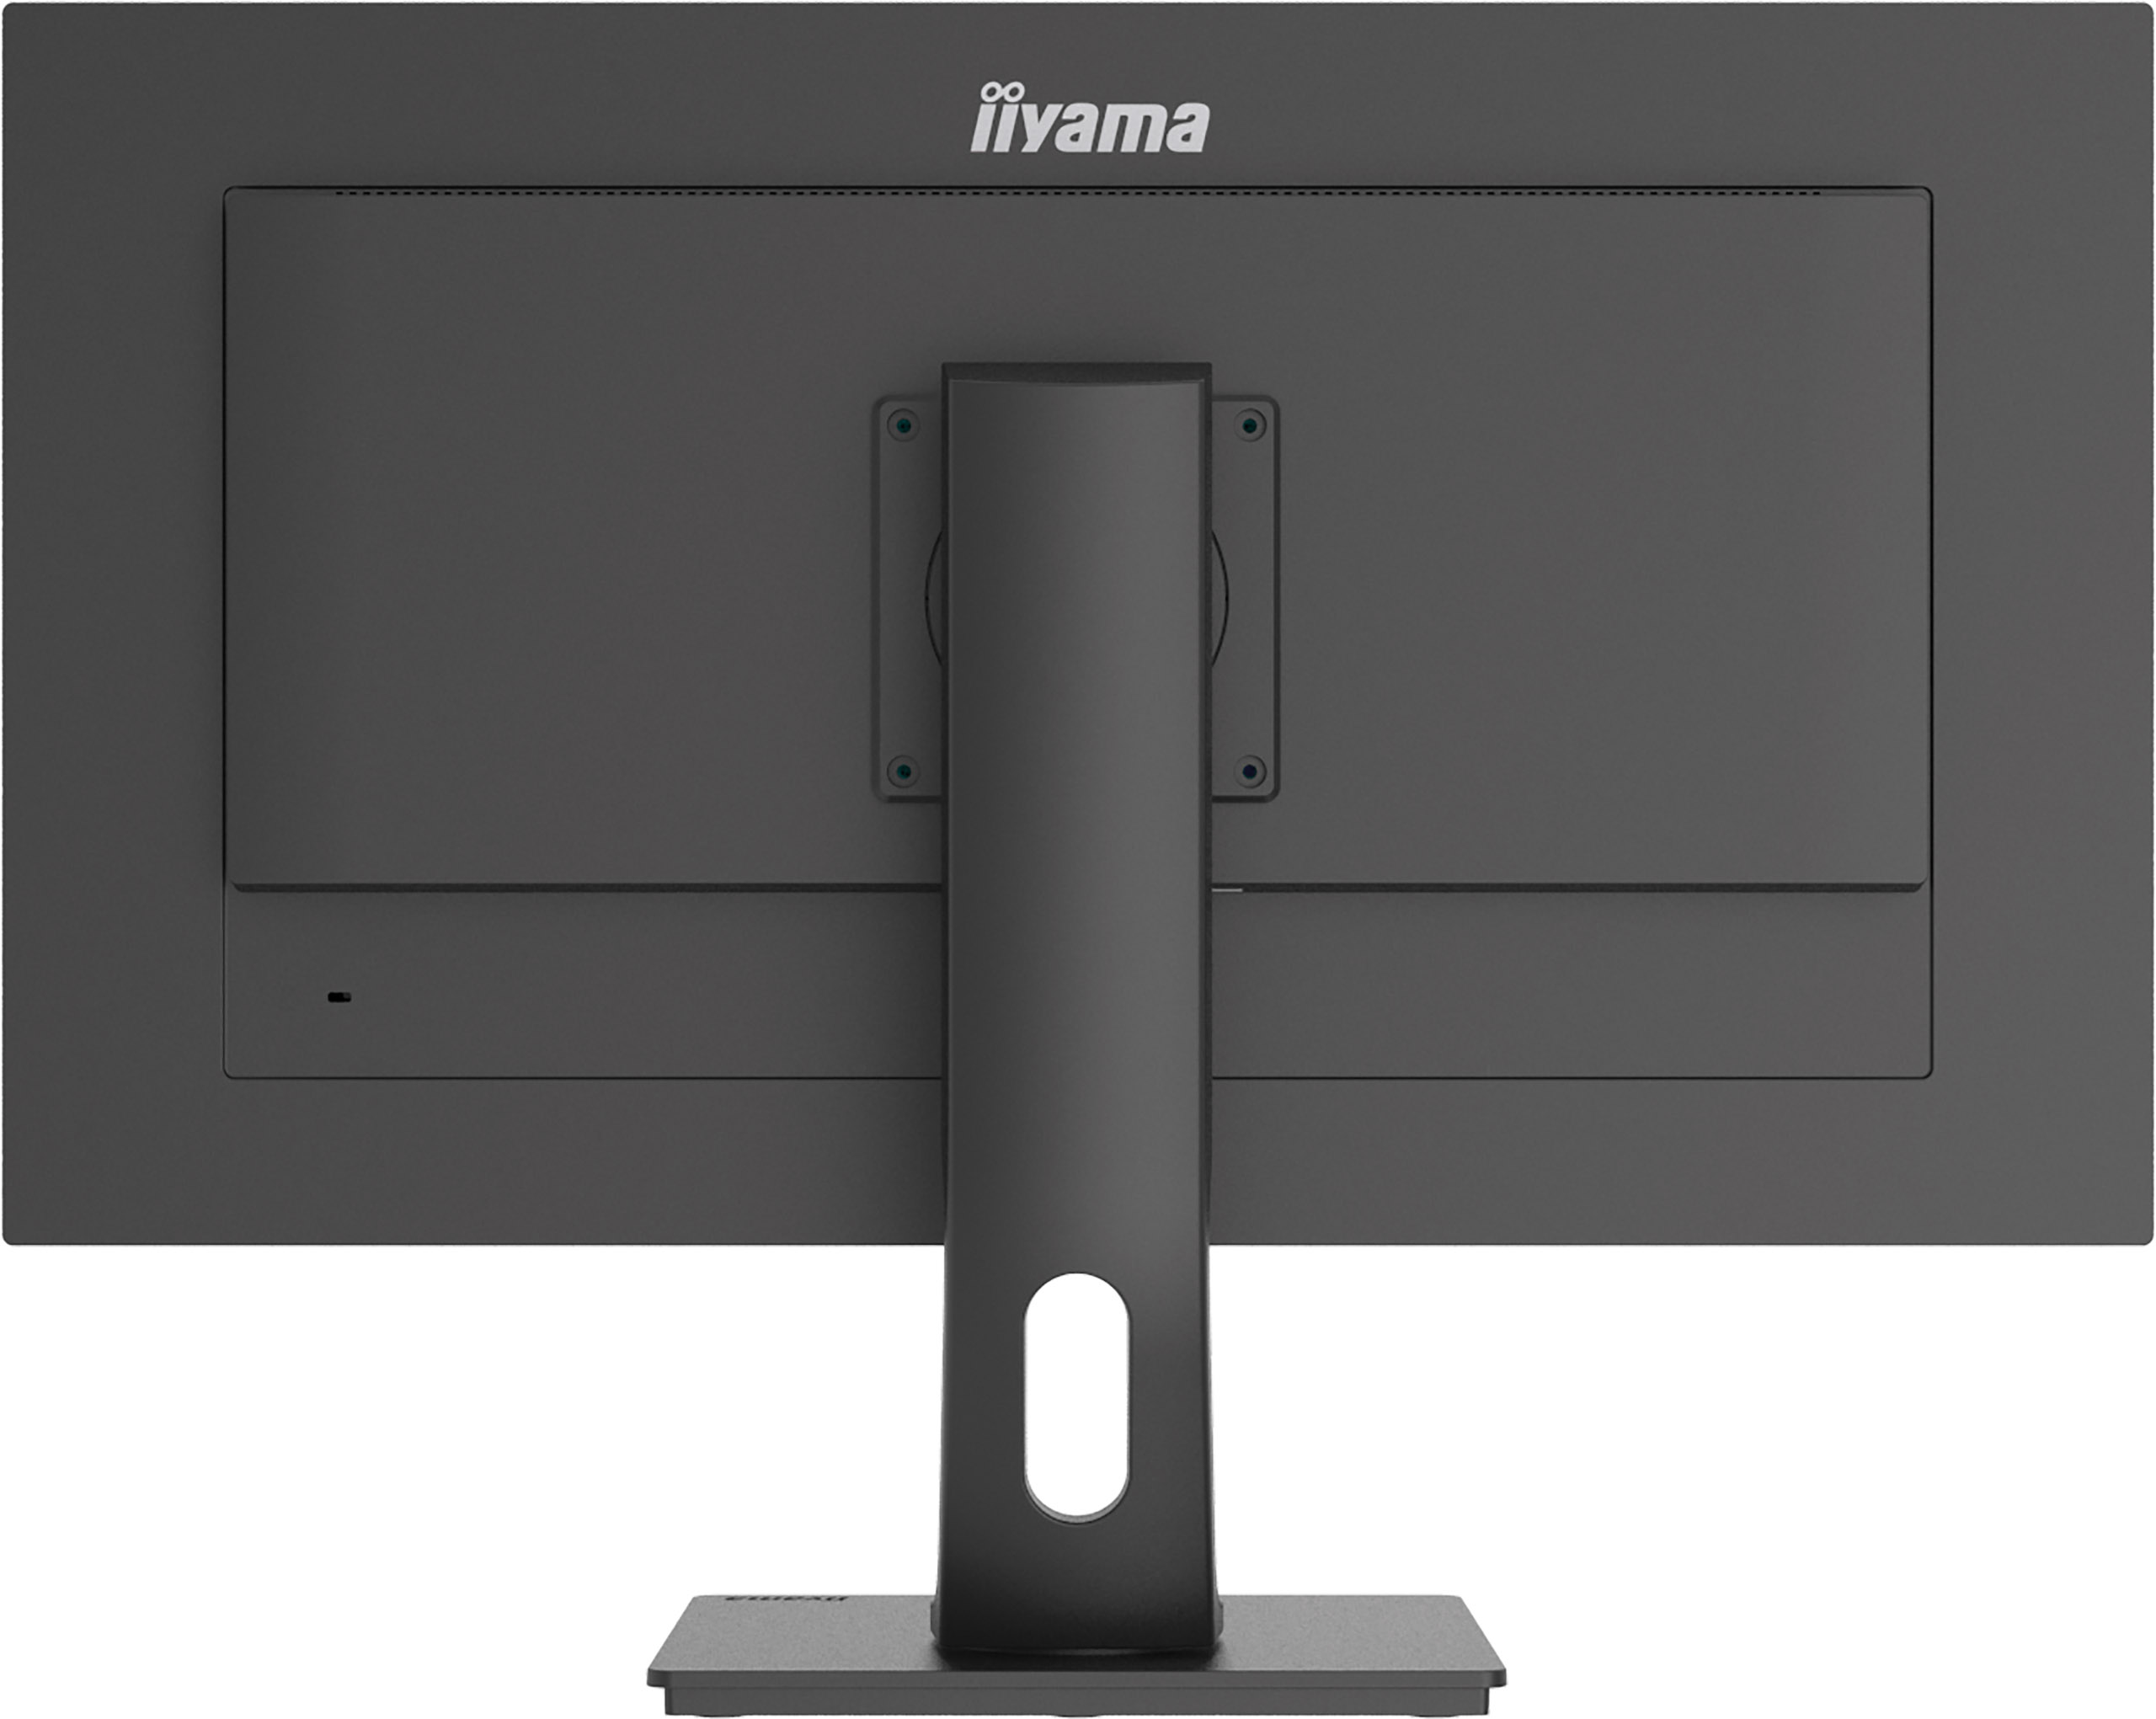 Iiyama ProLite XUB2893UHSU-B1 | 28" (71cm) | UHD Monitor